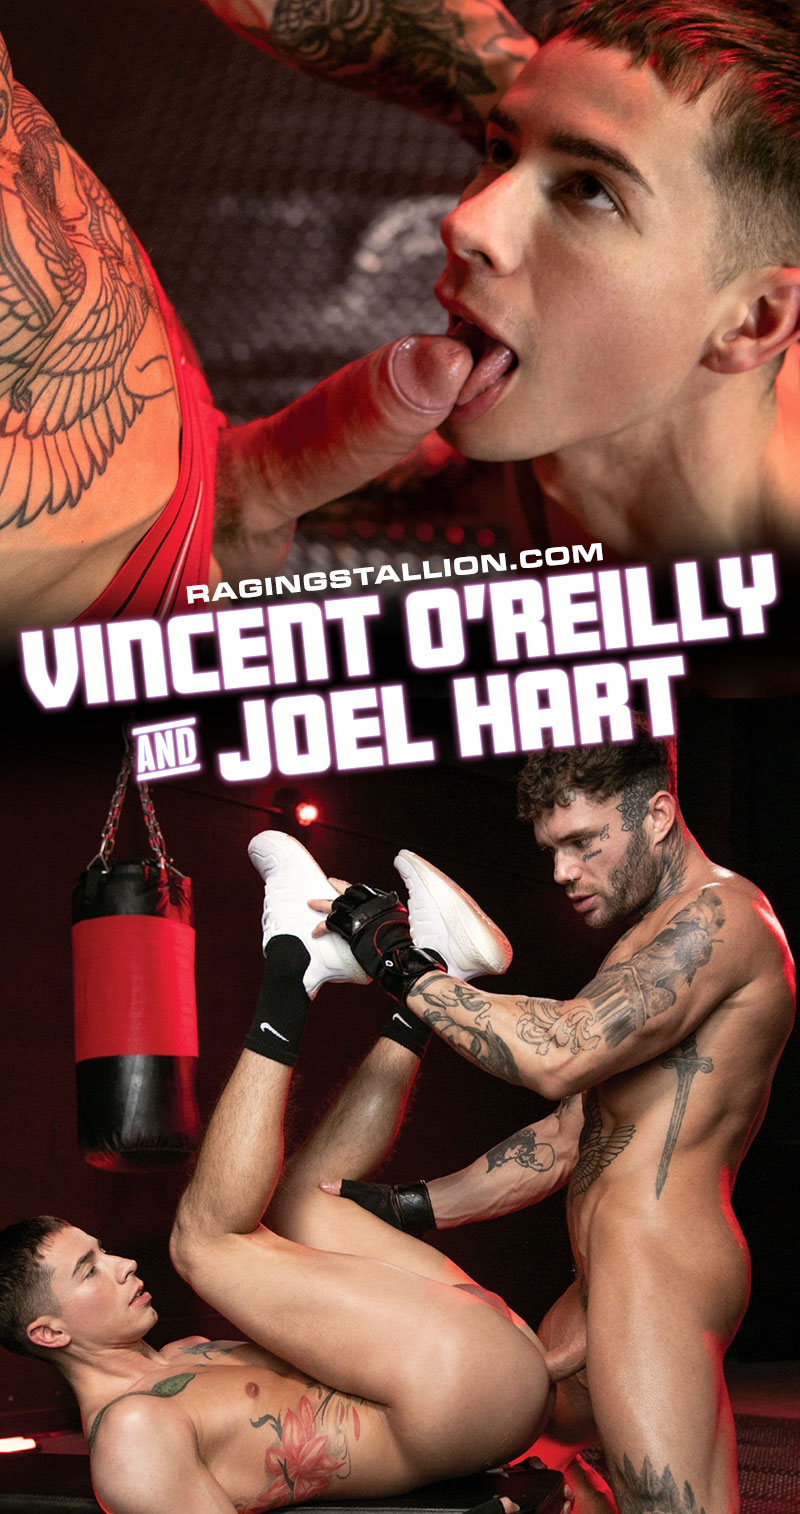 Vincent OReilly Joel Hart Raging Stallion